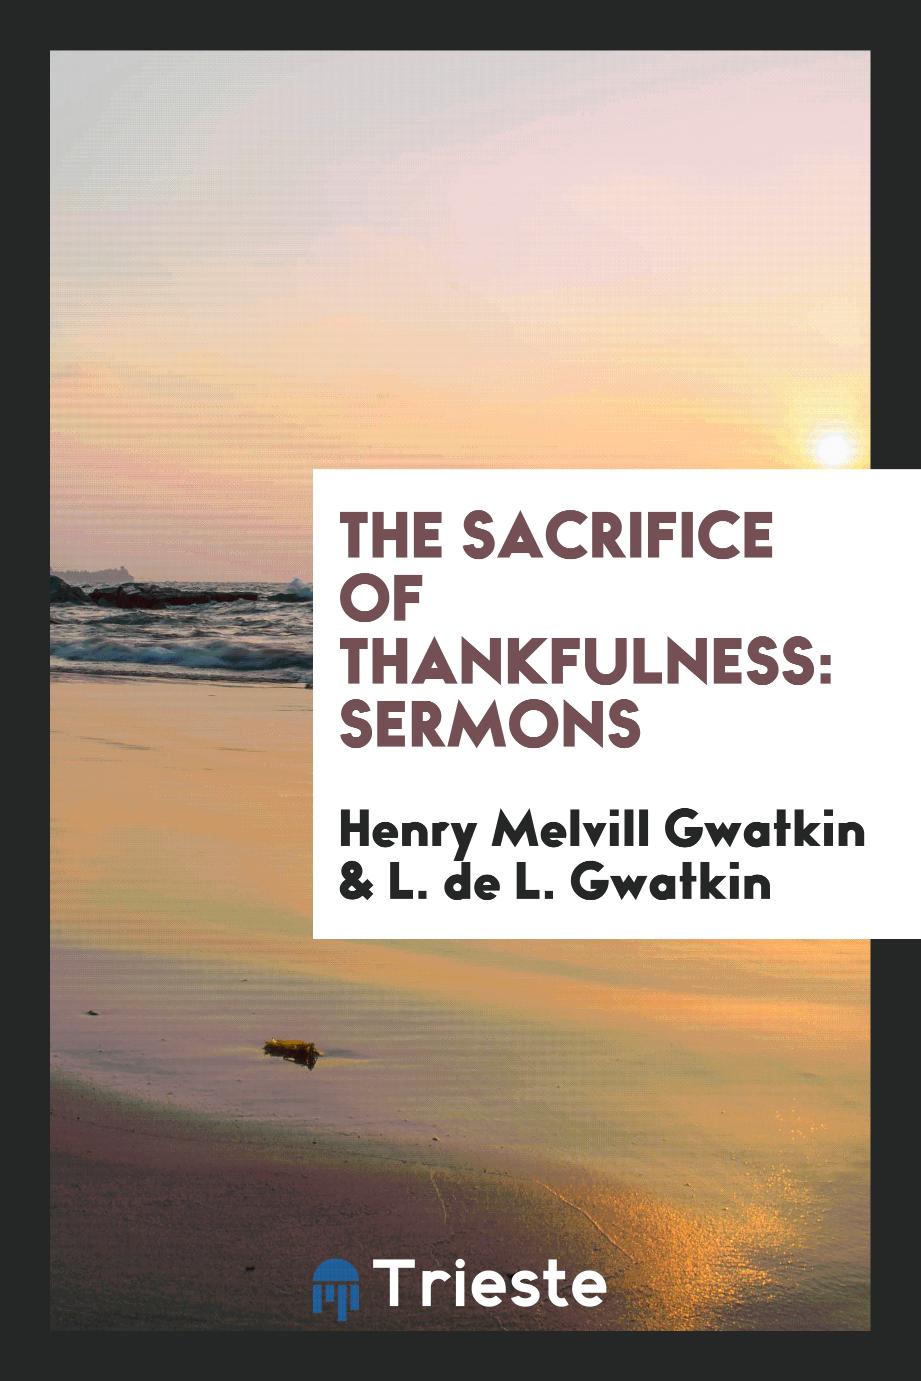 The sacrifice of thankfulness: sermons